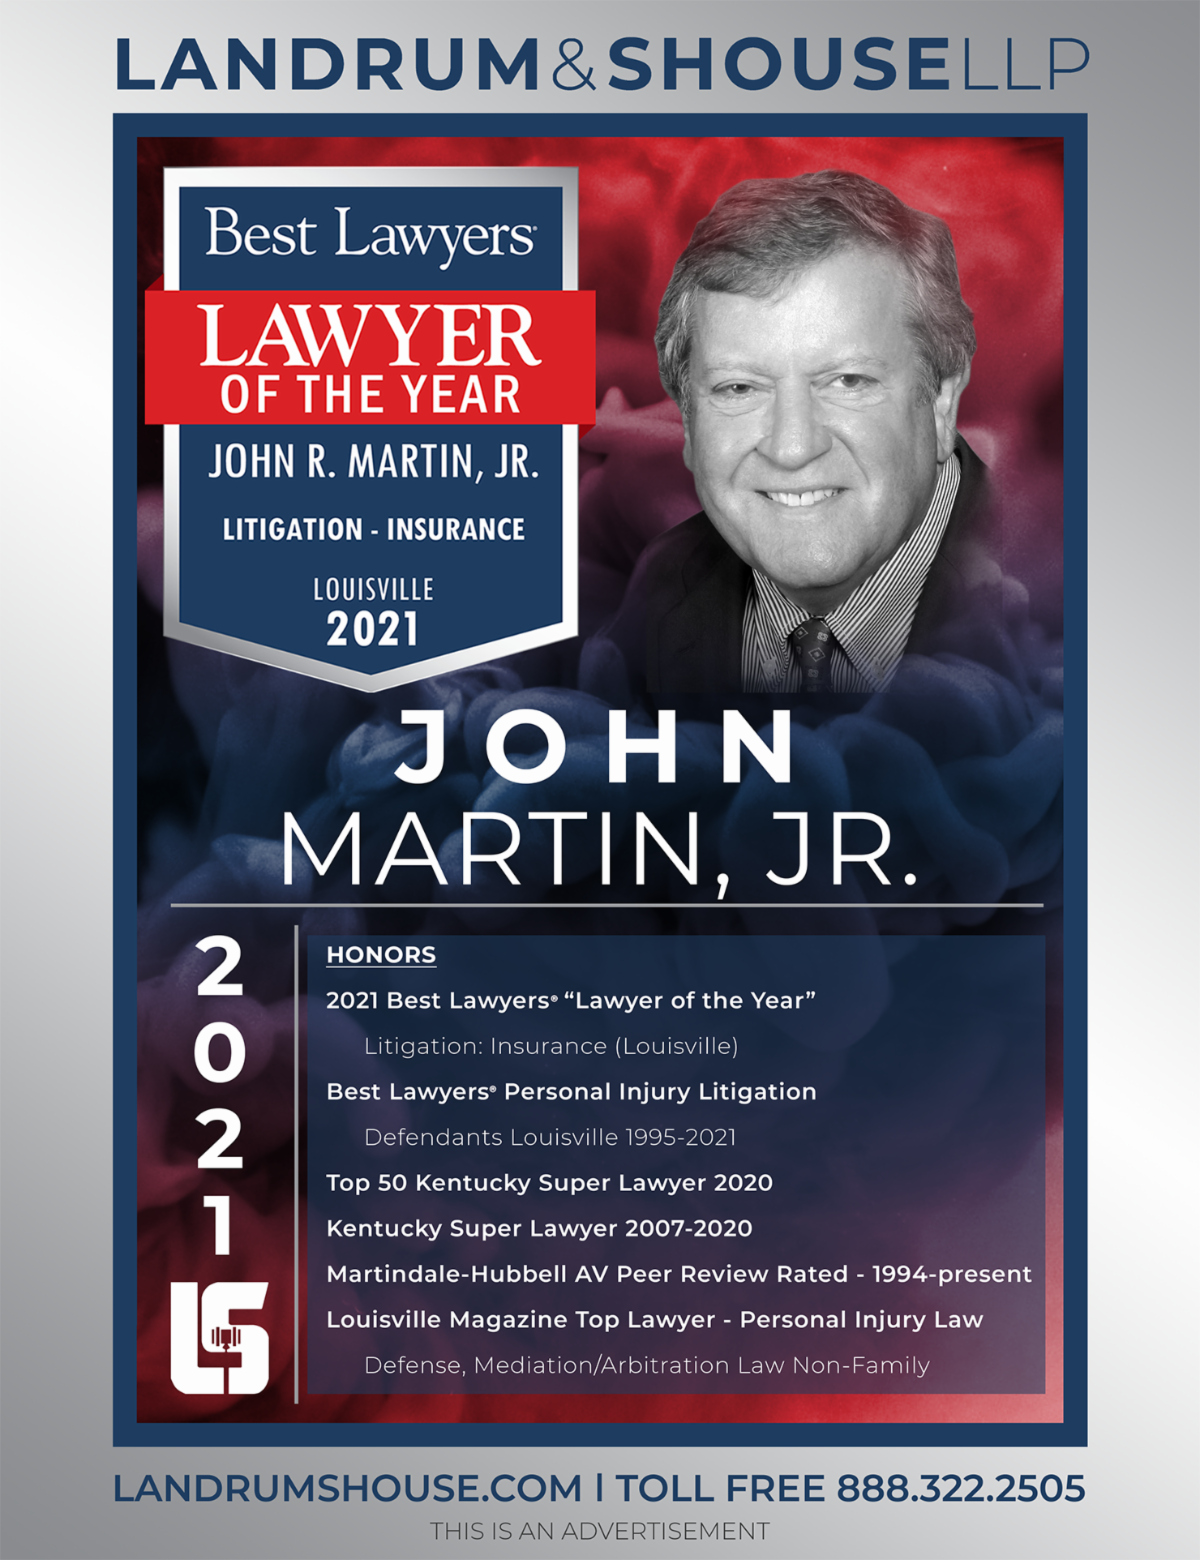 Landrum & Shouse LLP | Best Lawyers | Lawyer Of The Year | John R. Martin, Jr. | Litigation - Insurance | Louisville 2021